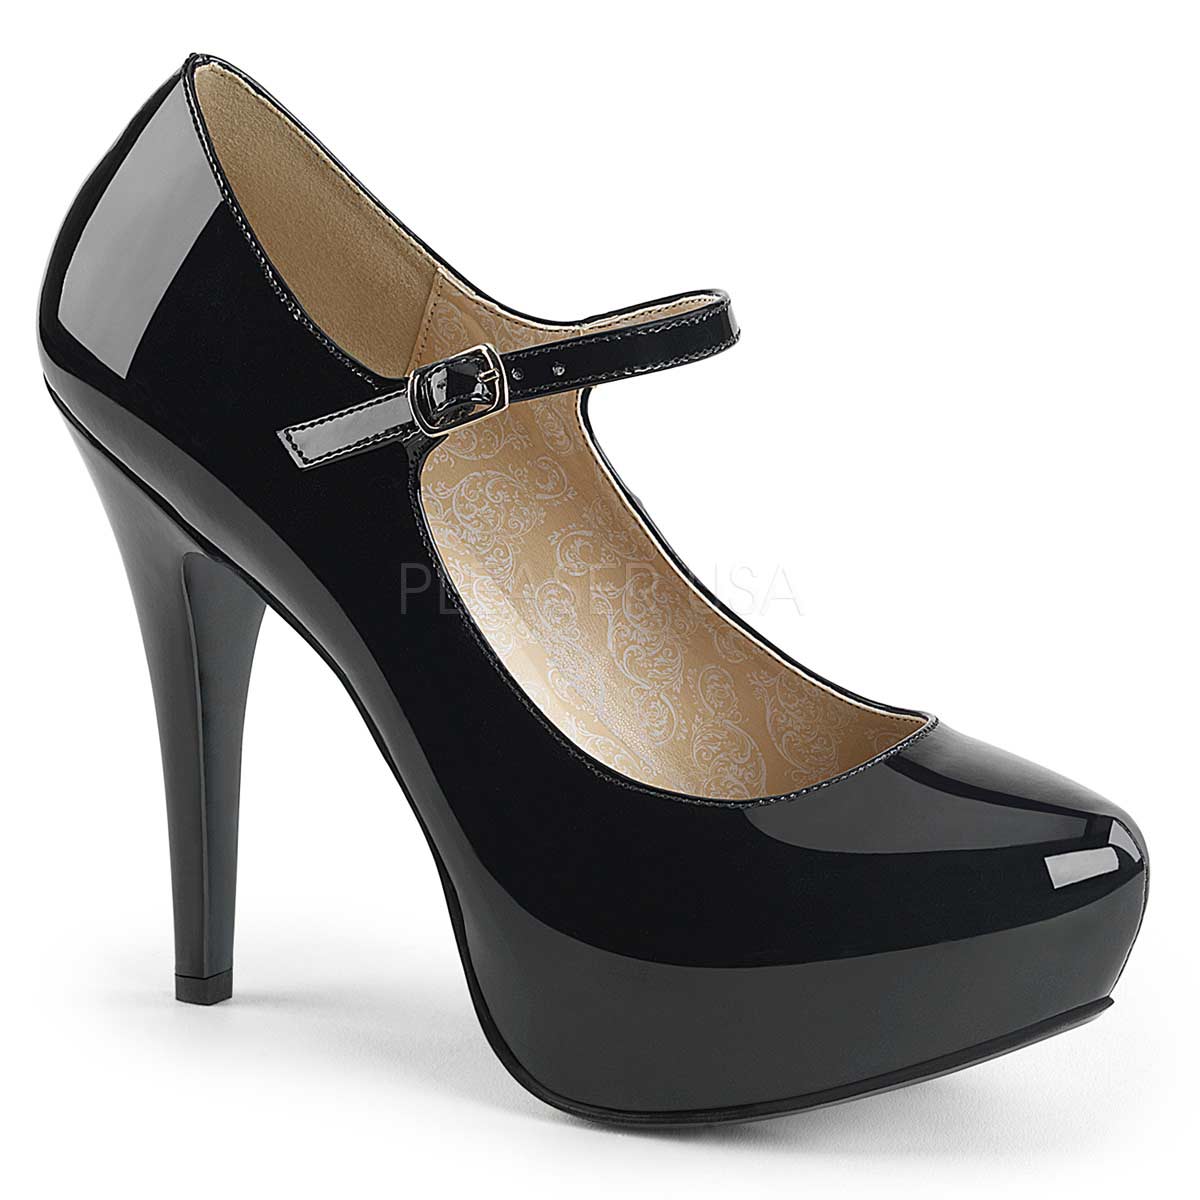 Pleaser CHLOE-02 - Black in Sexy Heels & Platforms - $65.95